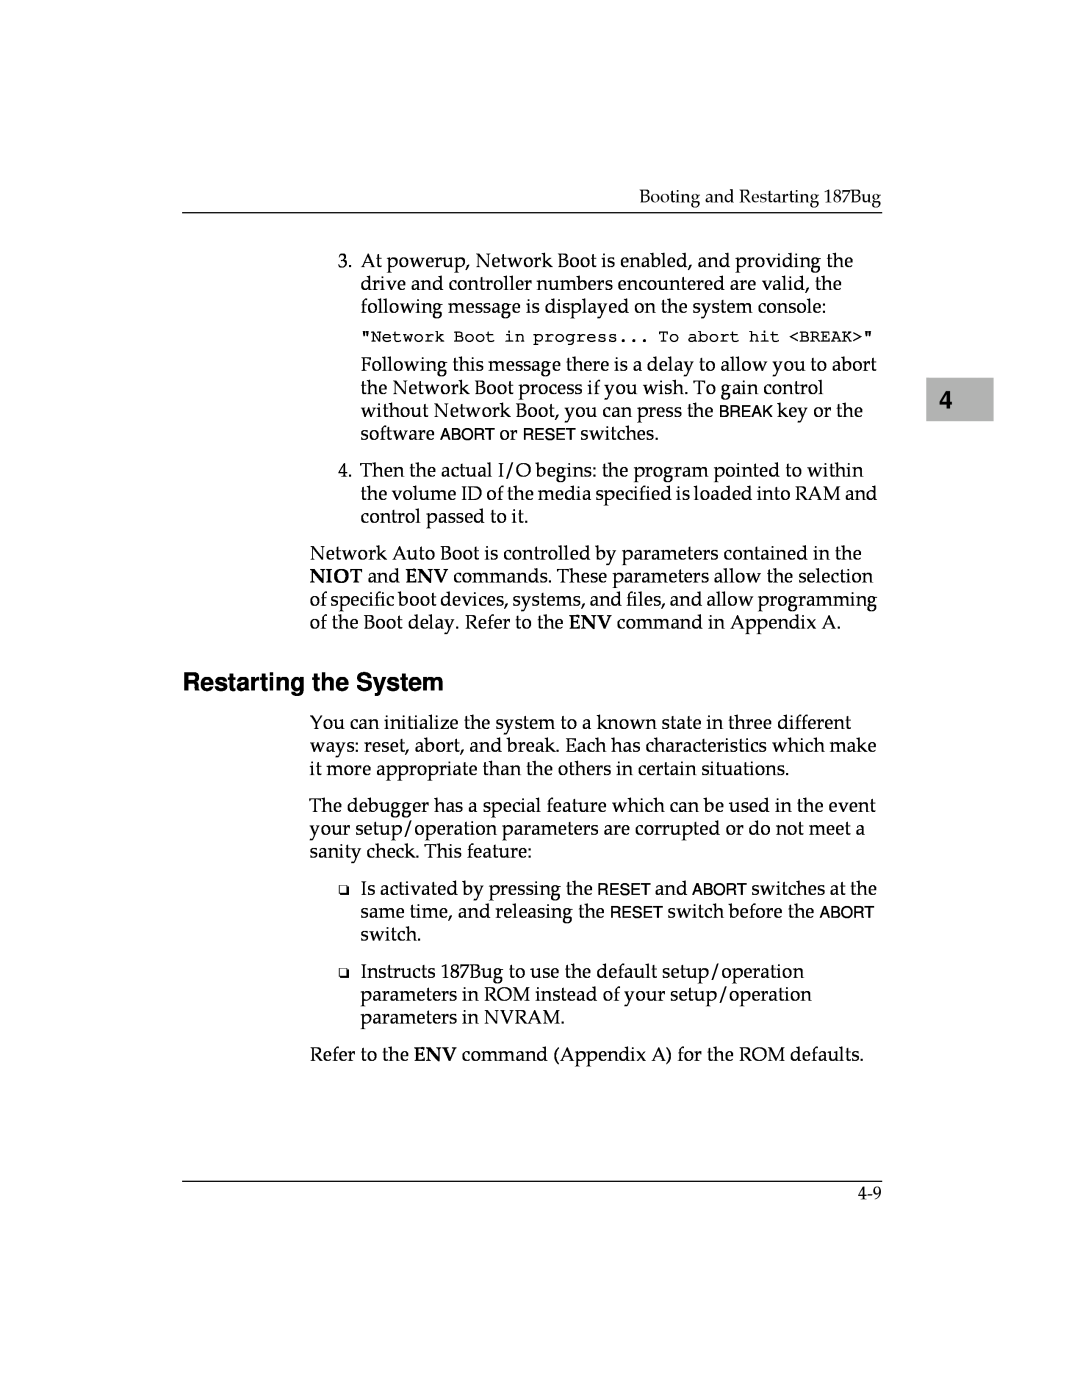 Motorola MVME187 manual Restarting the System 